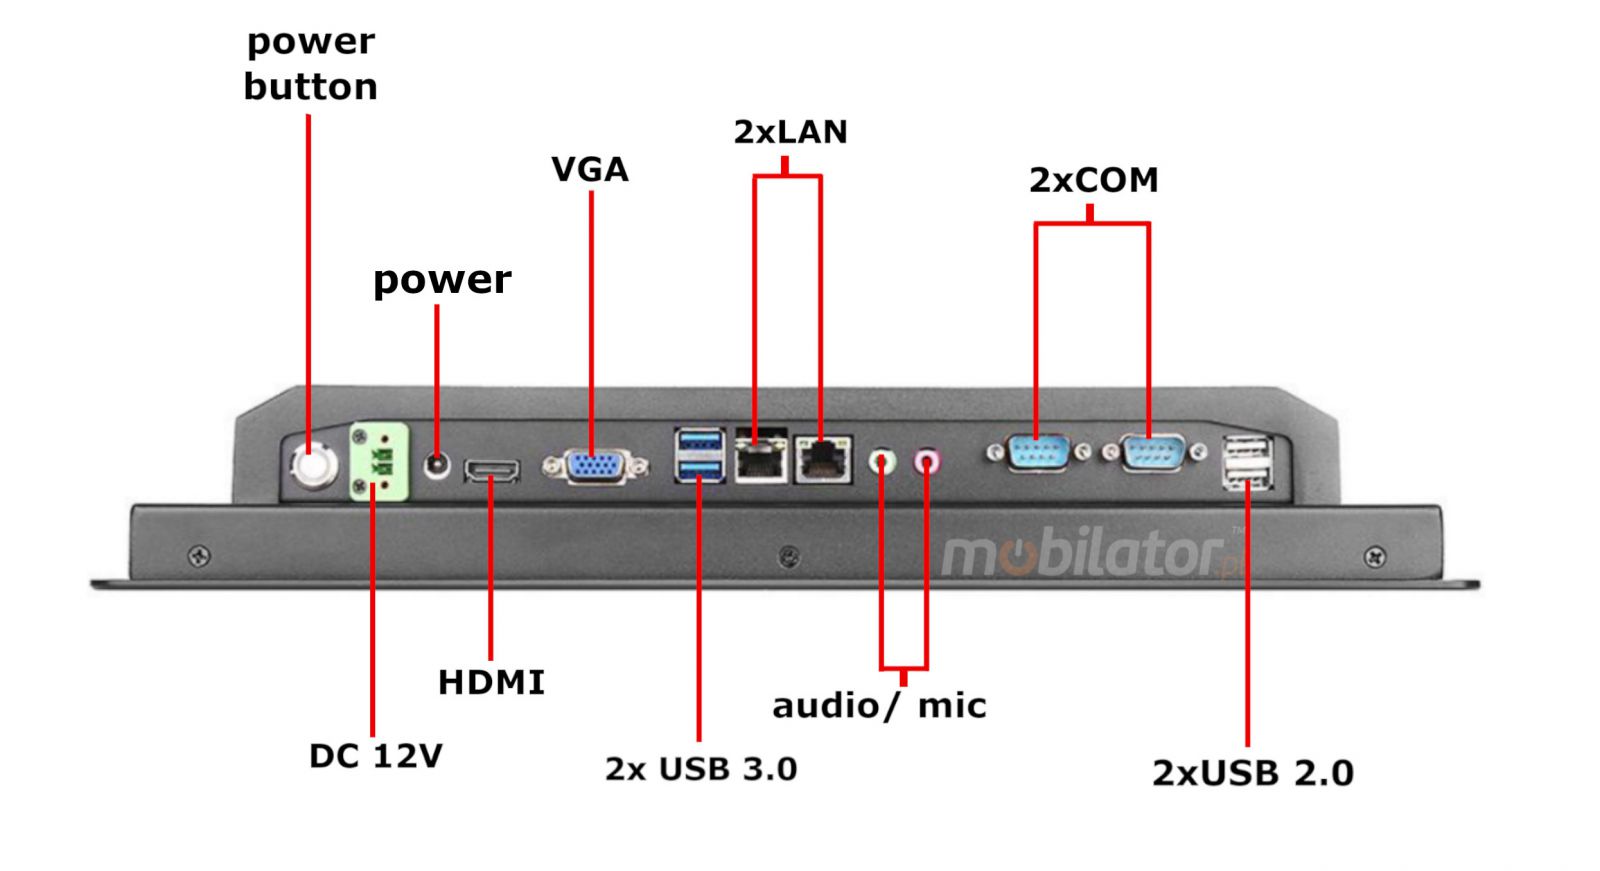 BIBOX-190PC2 with versatile connectors on the back